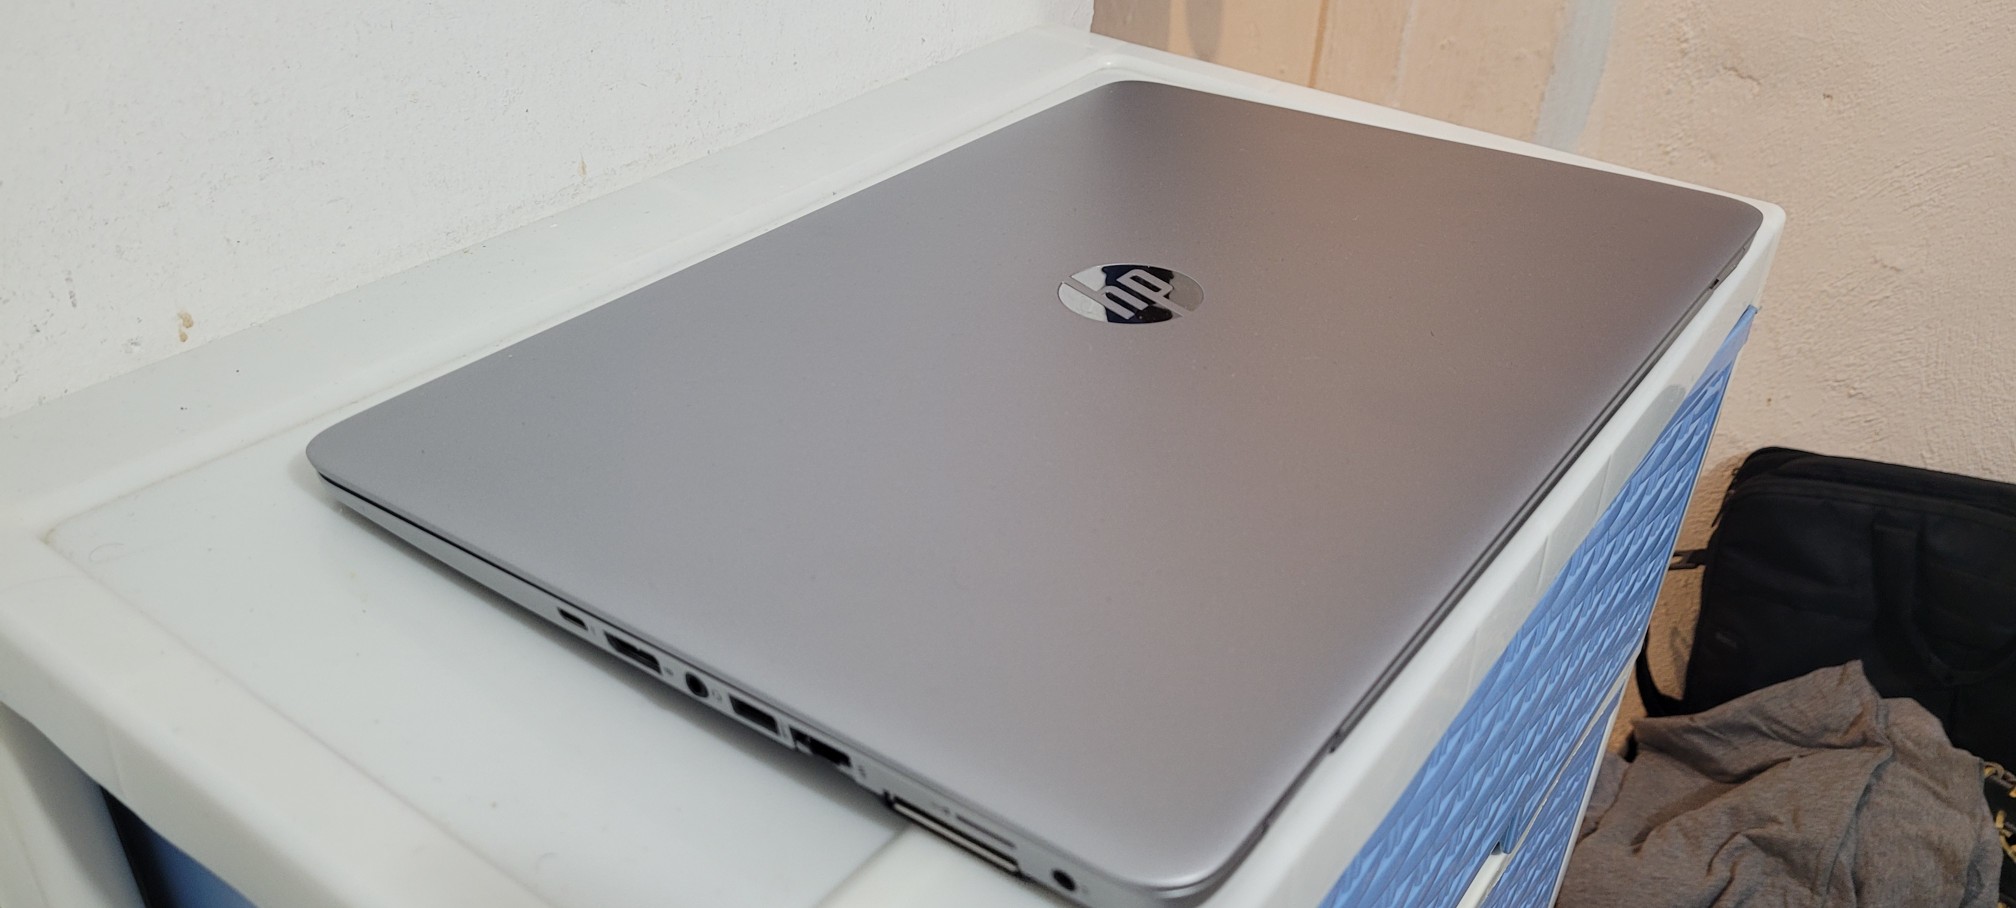 computadoras y laptops - laptop hp Slim 14 Pulg Core i5 6ta Gen Ram 8gb ddr4 Disco 128gb SSD Solido hdmi 2